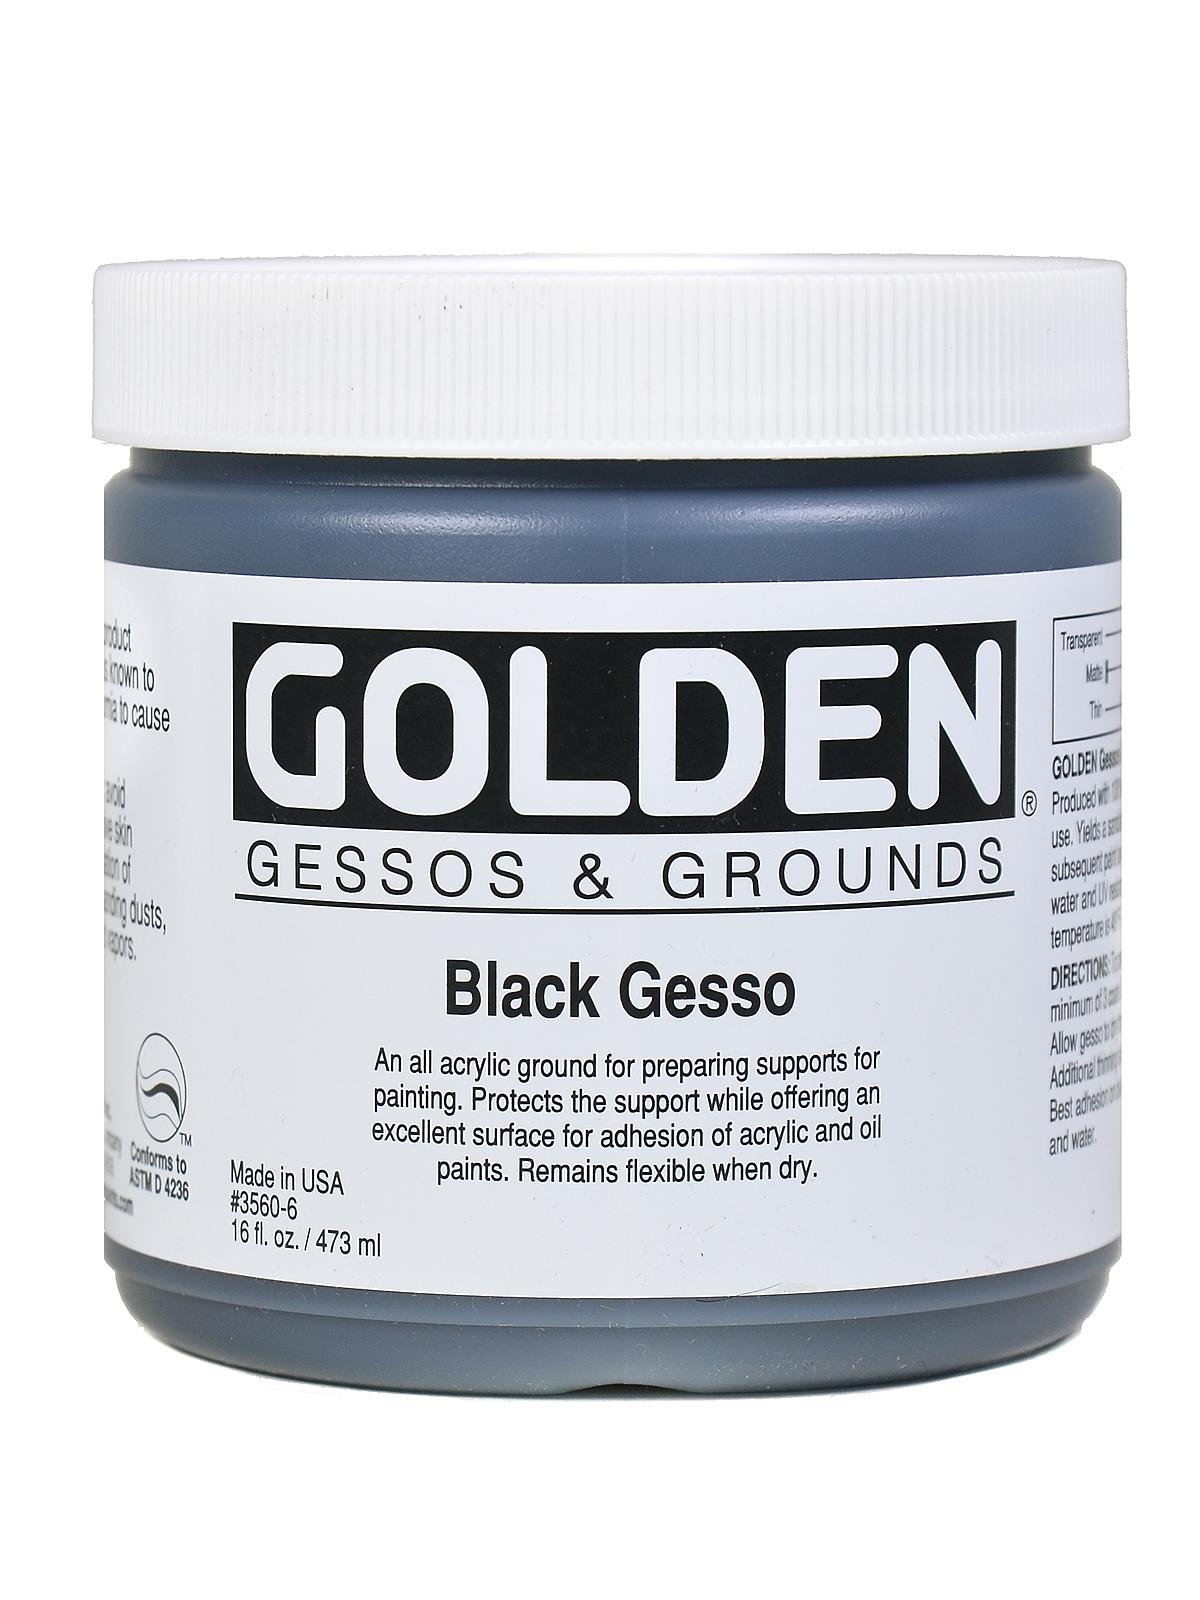 Golden Black Gesso - 8 oz.